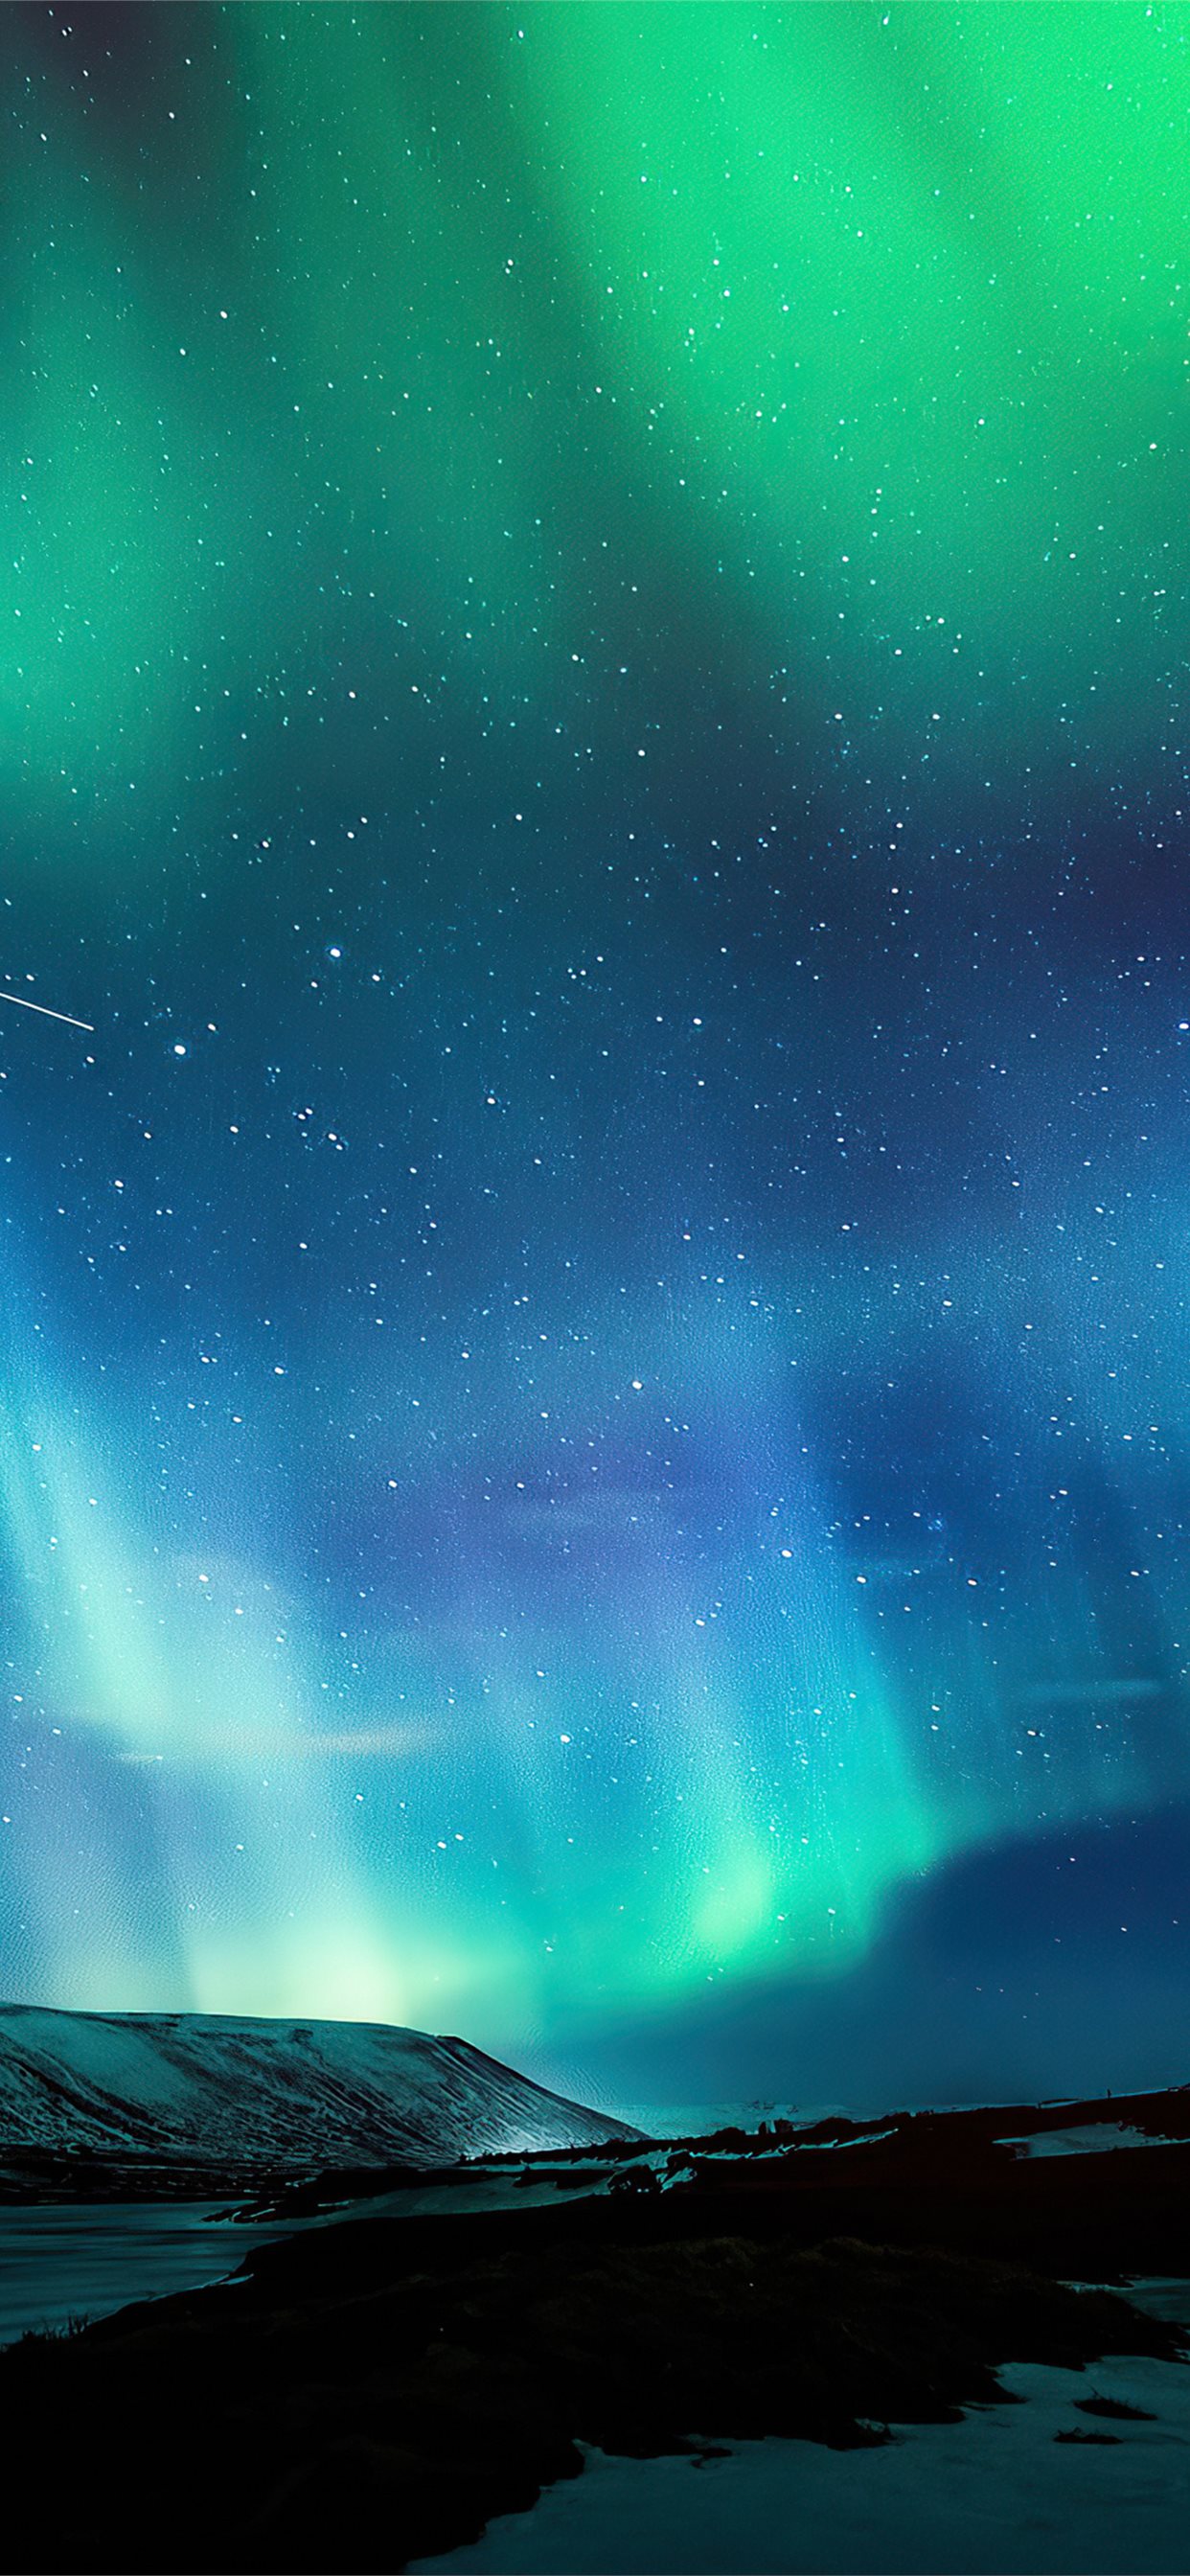 Download wallpaper 750x1334 aurora borealis northern lights lake sky  nature iphone 7 iphone 8 750x1334 hd background 23785